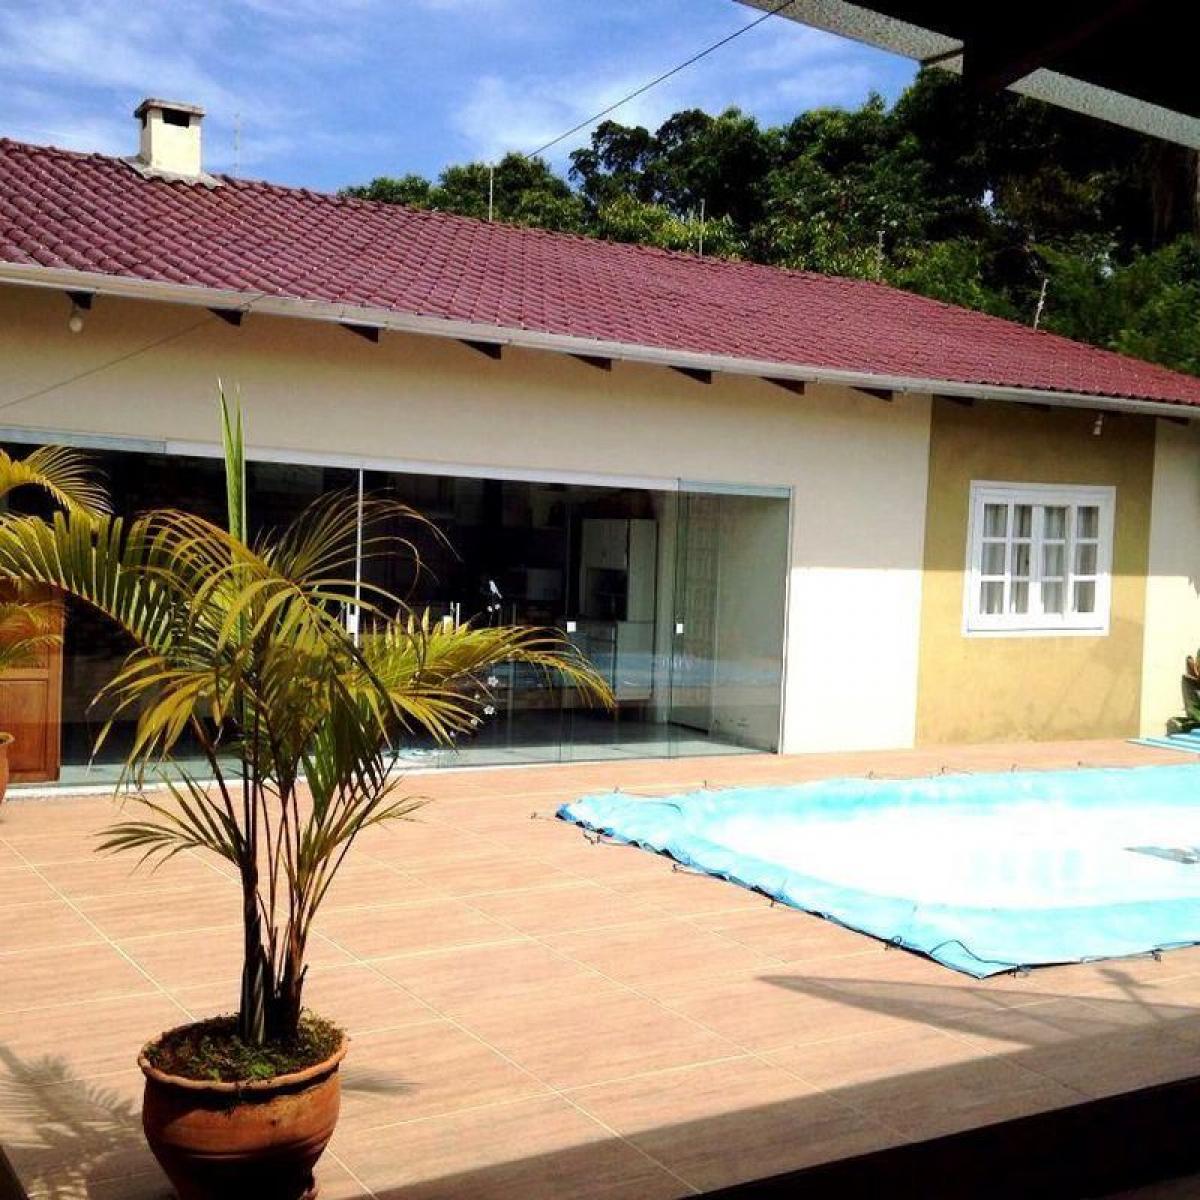 Picture of Home For Sale in Bombinhas, Santa Catarina, Brazil